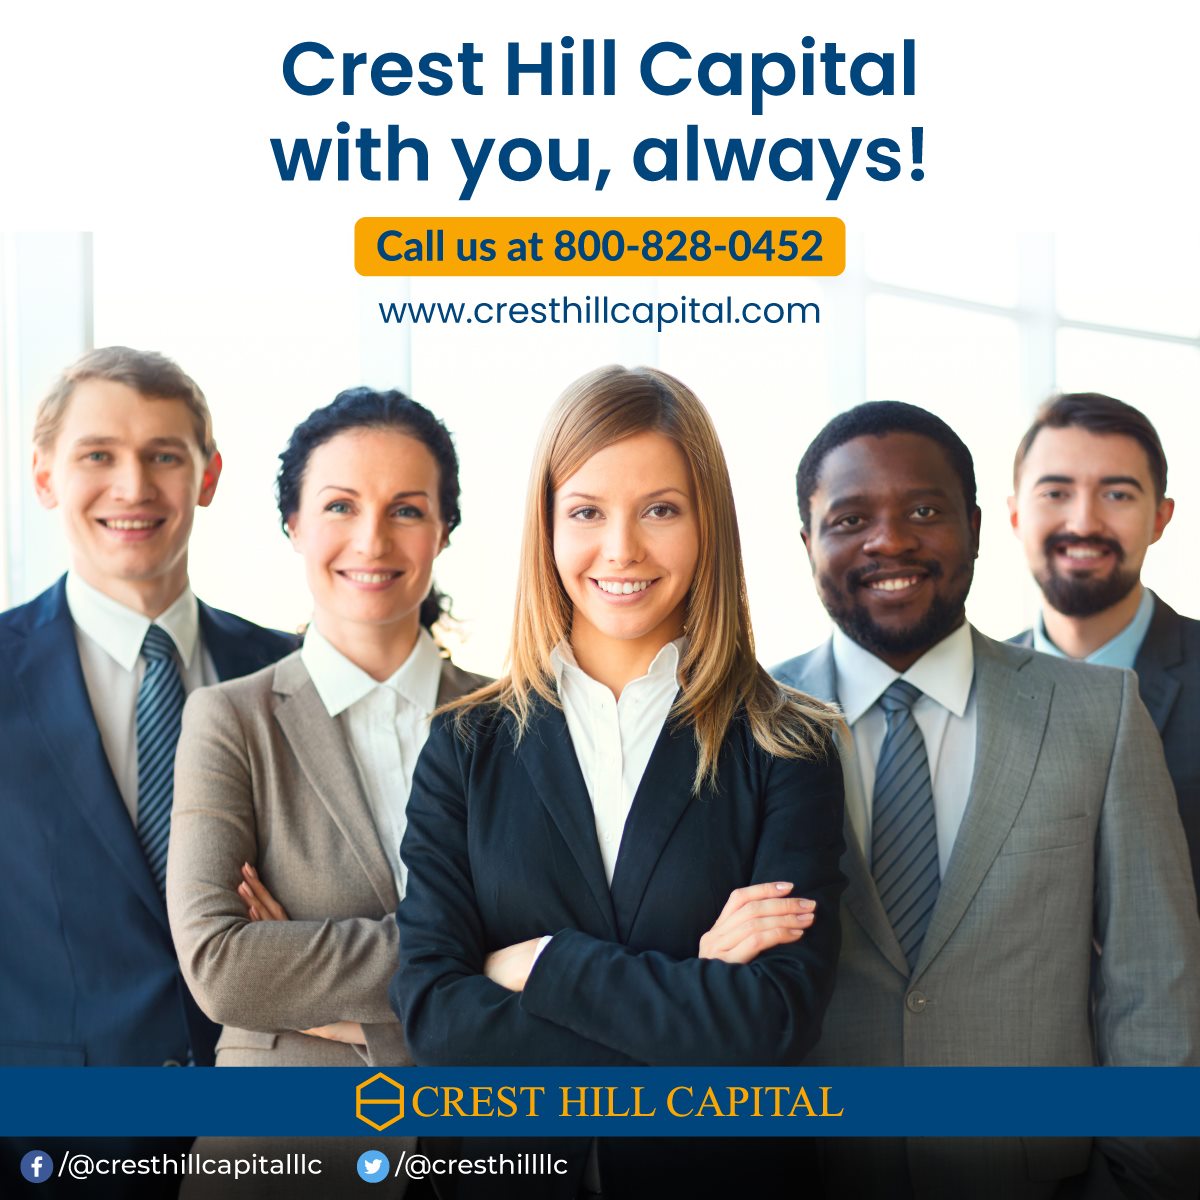 (c) Cresthillcapital.com